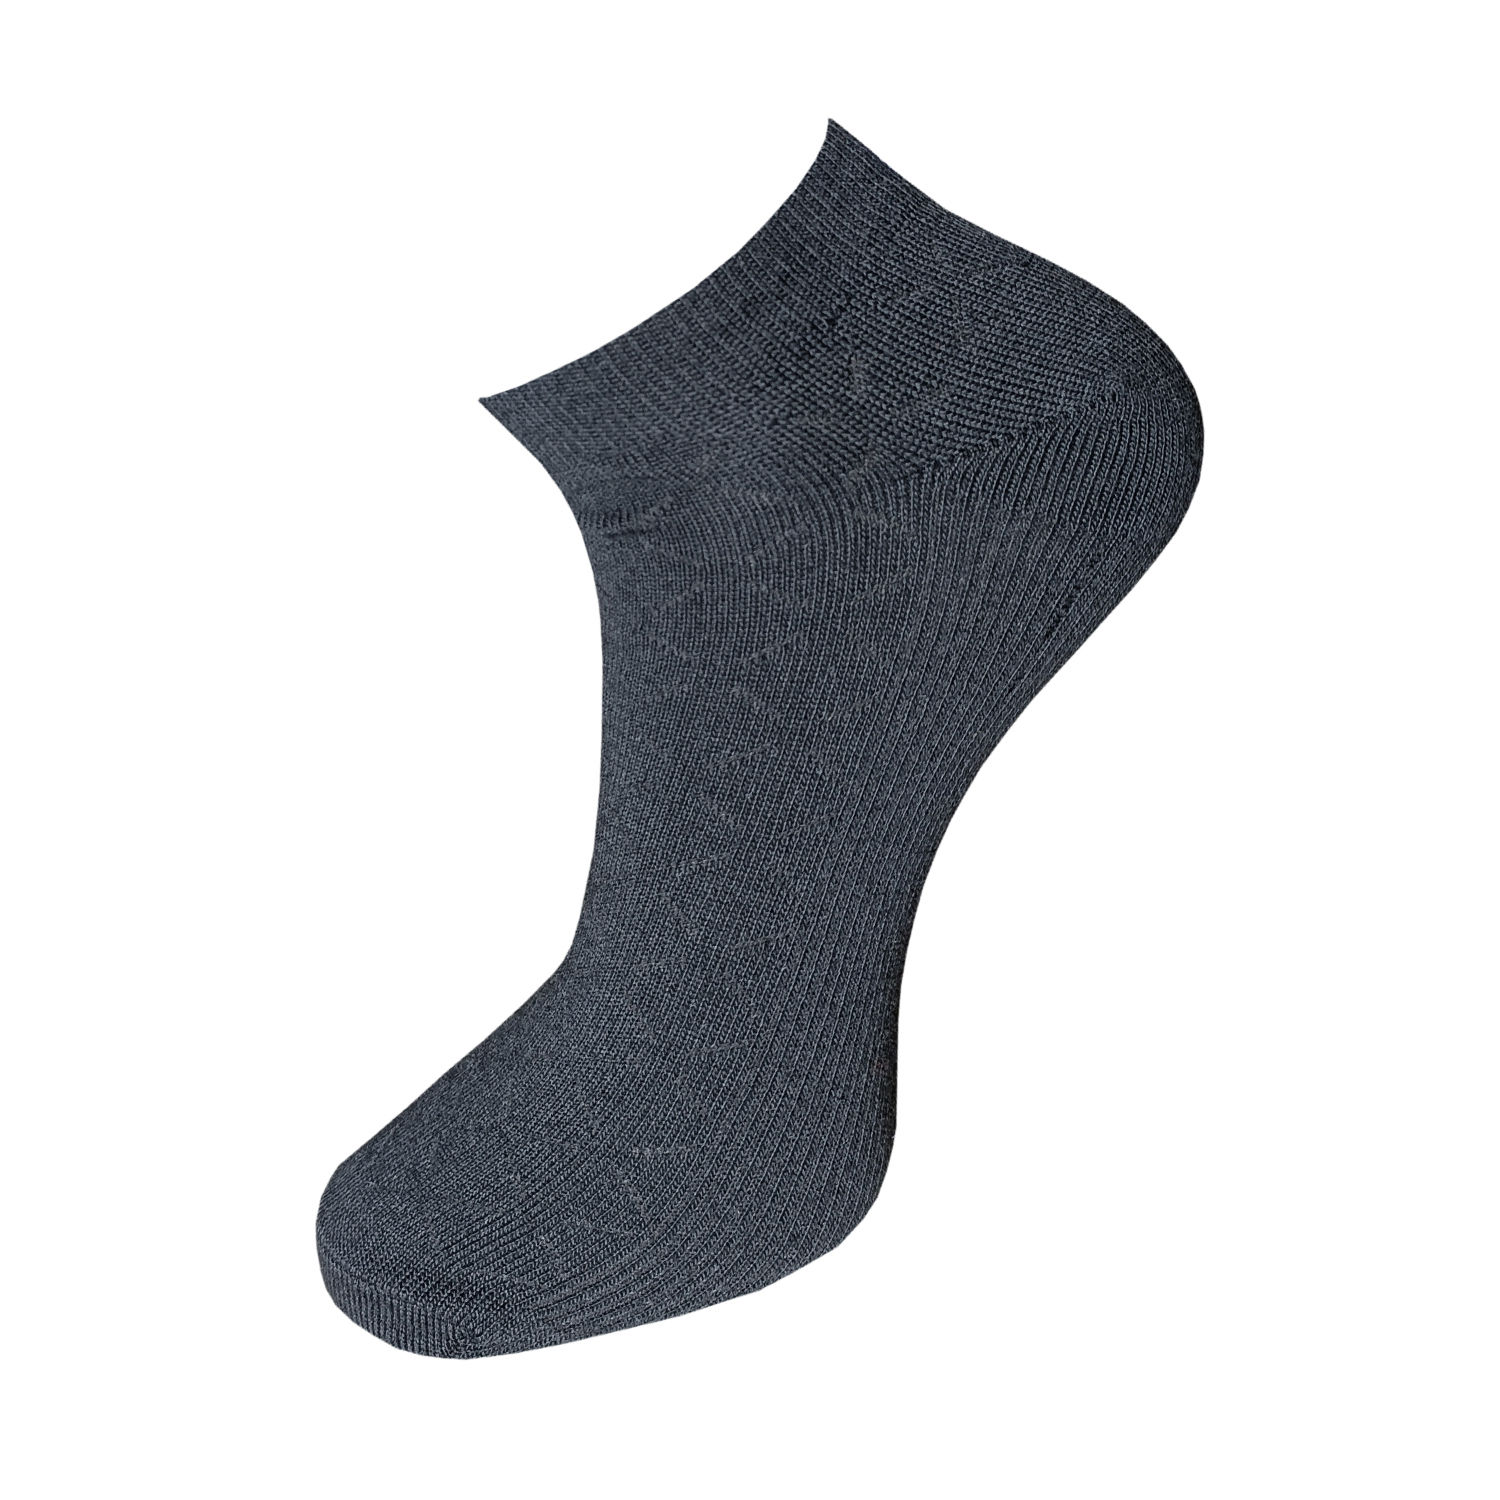 Cotton lycra uniform socks